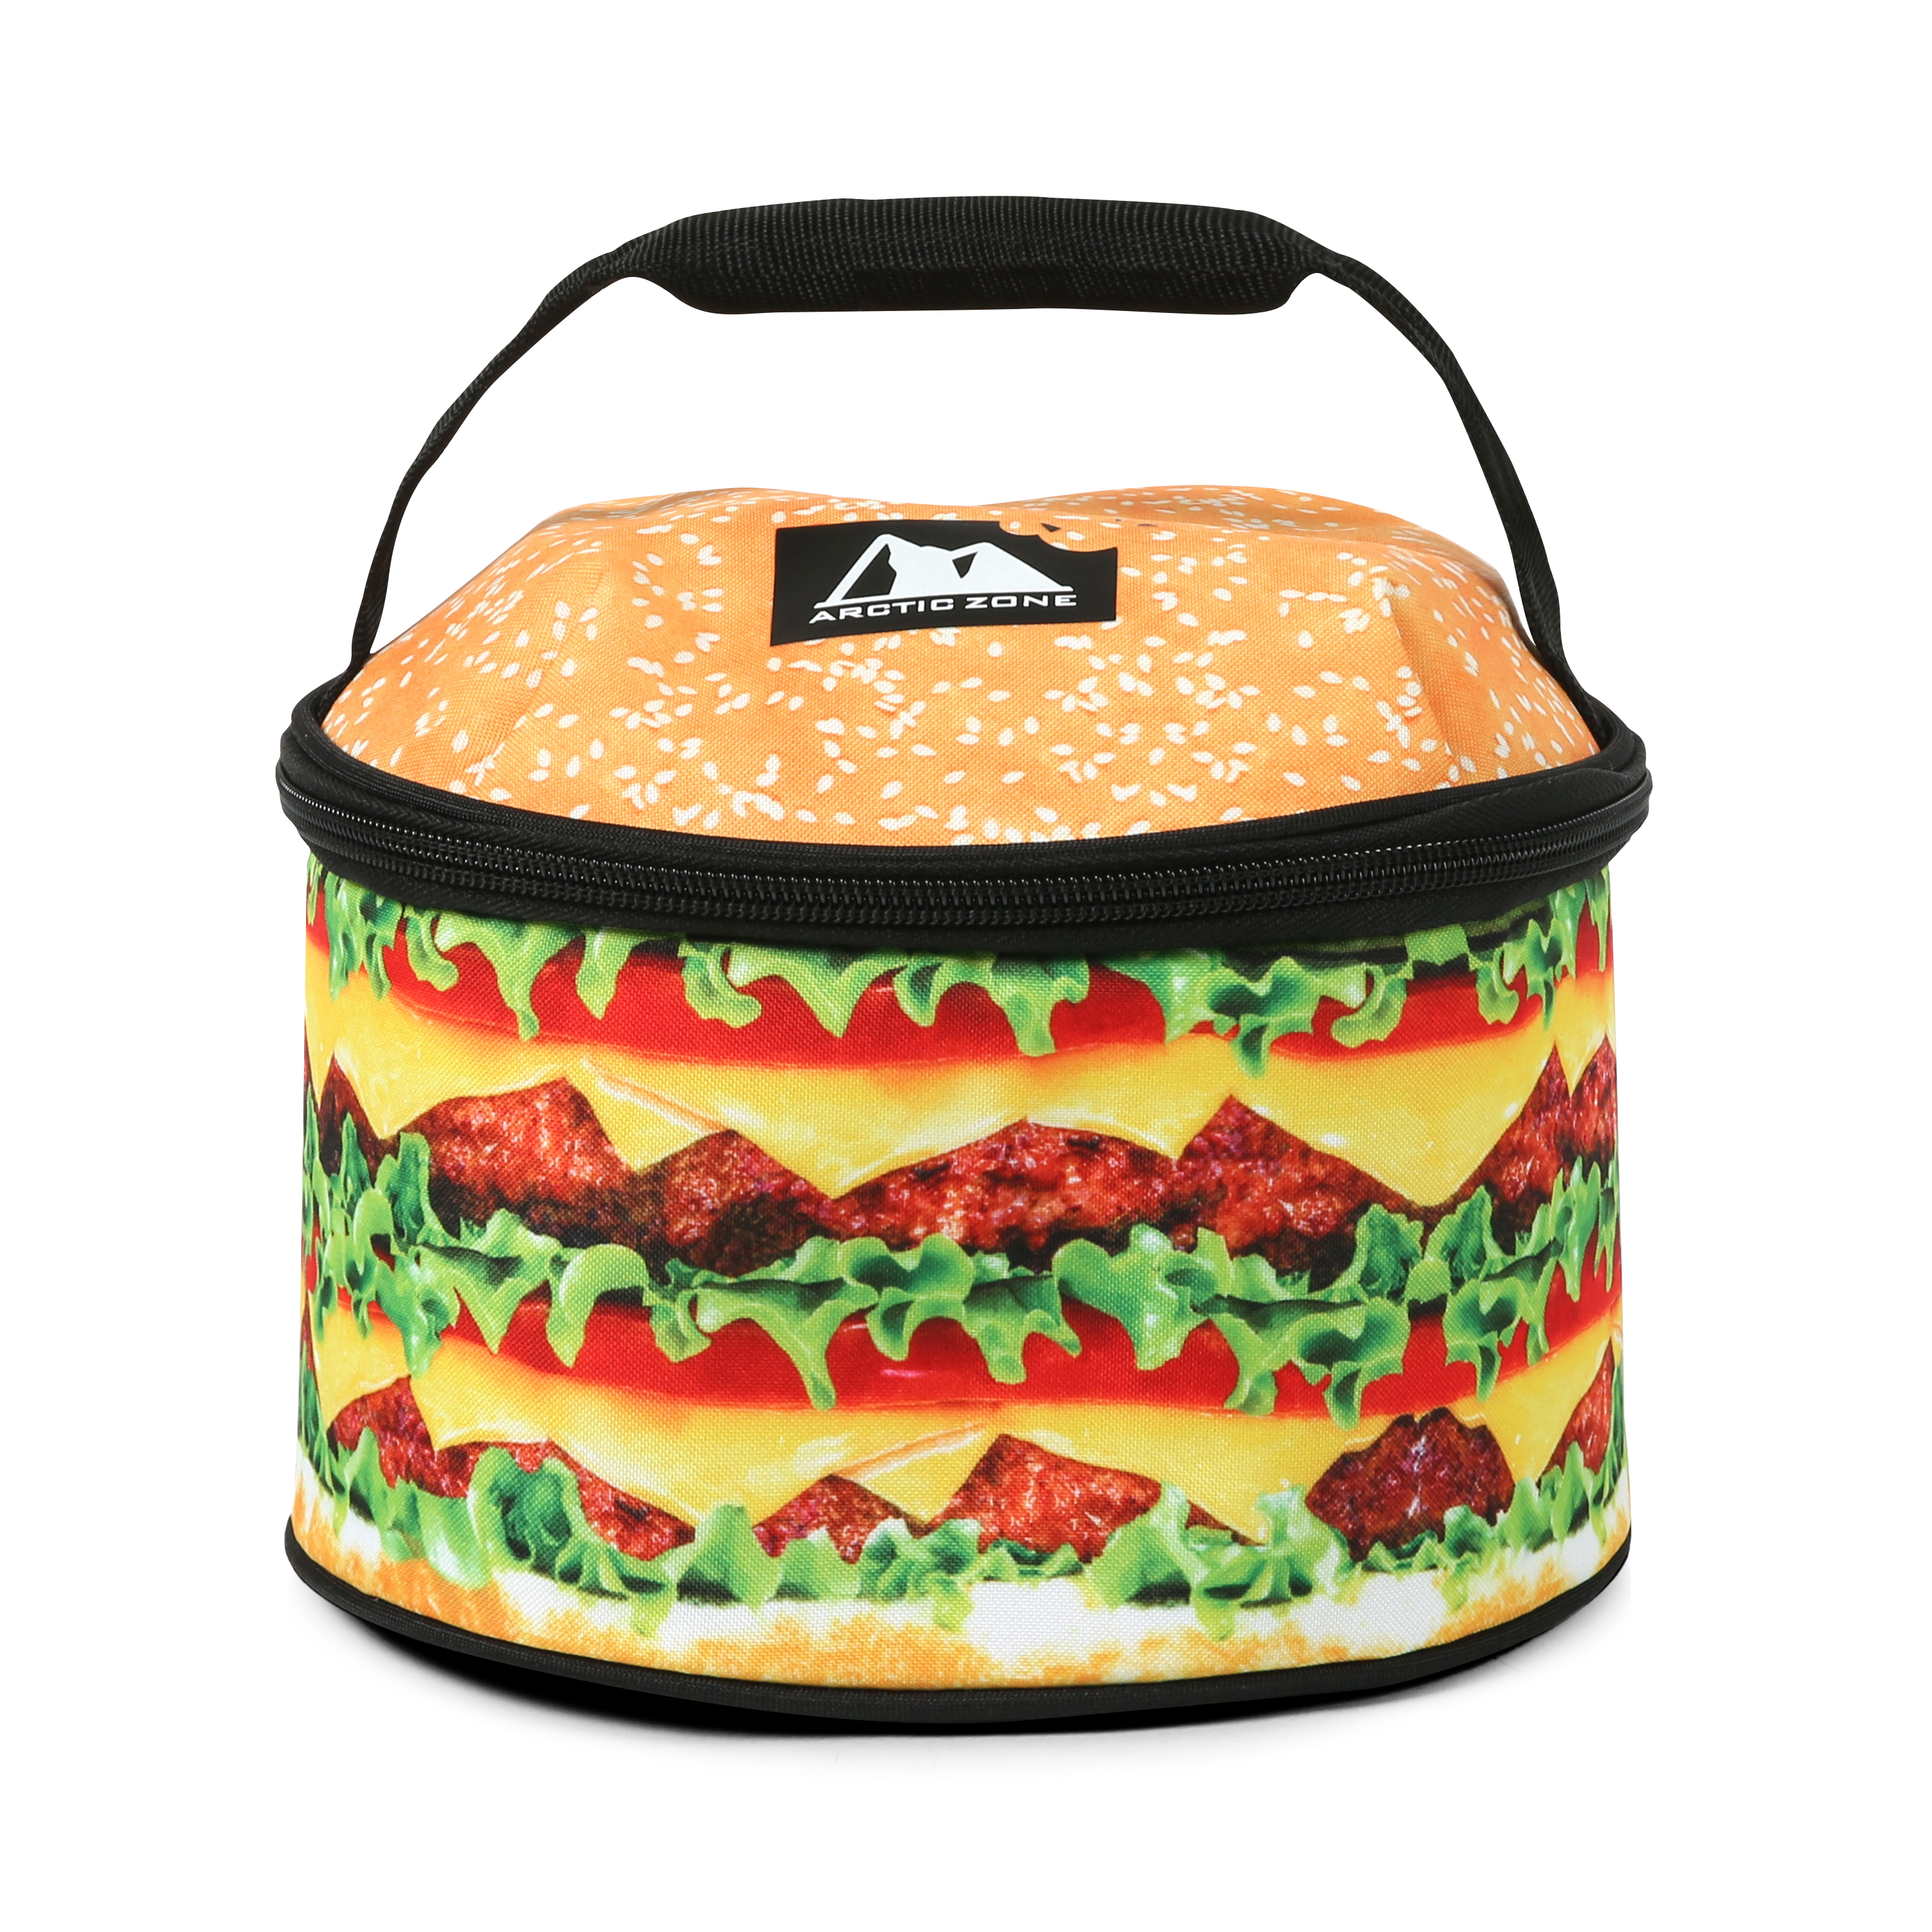 Arctic Zone Kids' Big Burger Lunch Bag Set